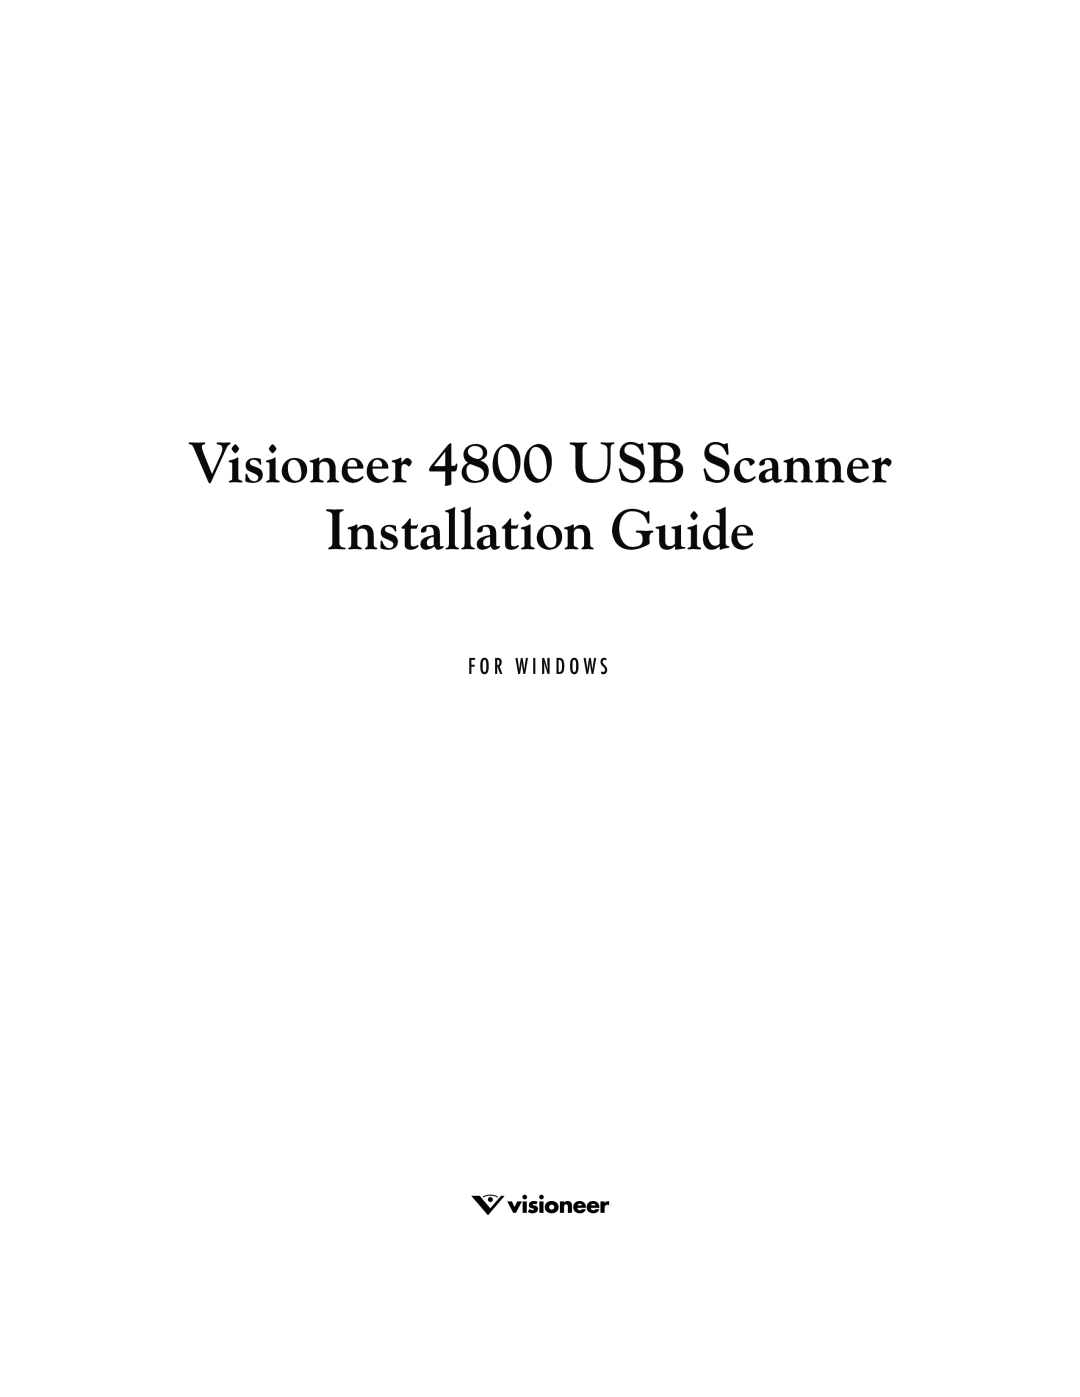 Visioneer manual Visioneer 4800 USB Scanner Installation Guide, F O R W I N D O W S 